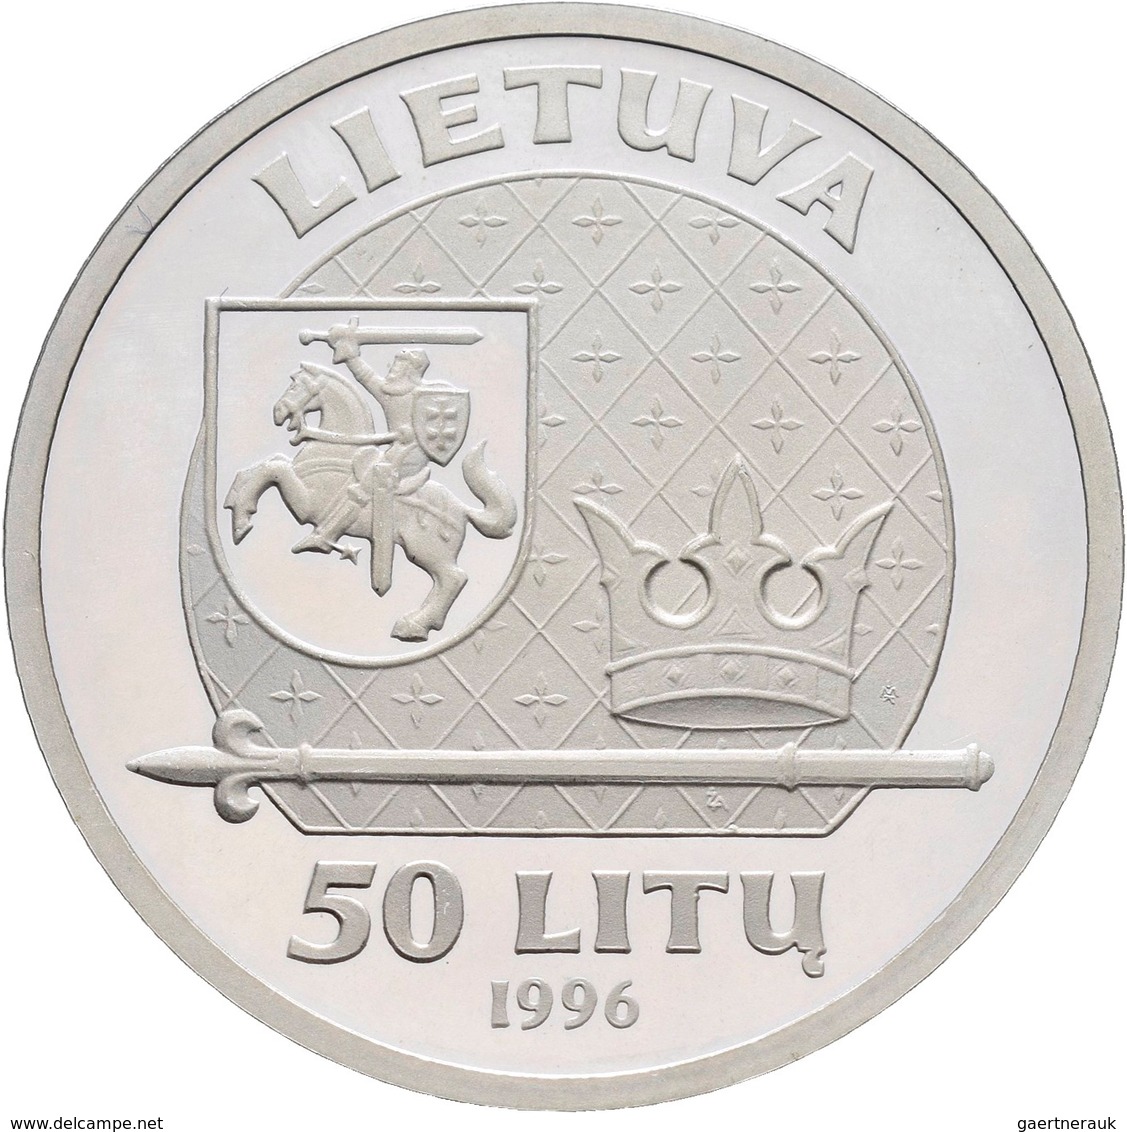 Litauen: 50 Litu 1996, König Mindaugas. KM# 102. In Kapsel, Ohne Etui/Zertifikat, Polierte Platte. - Litauen